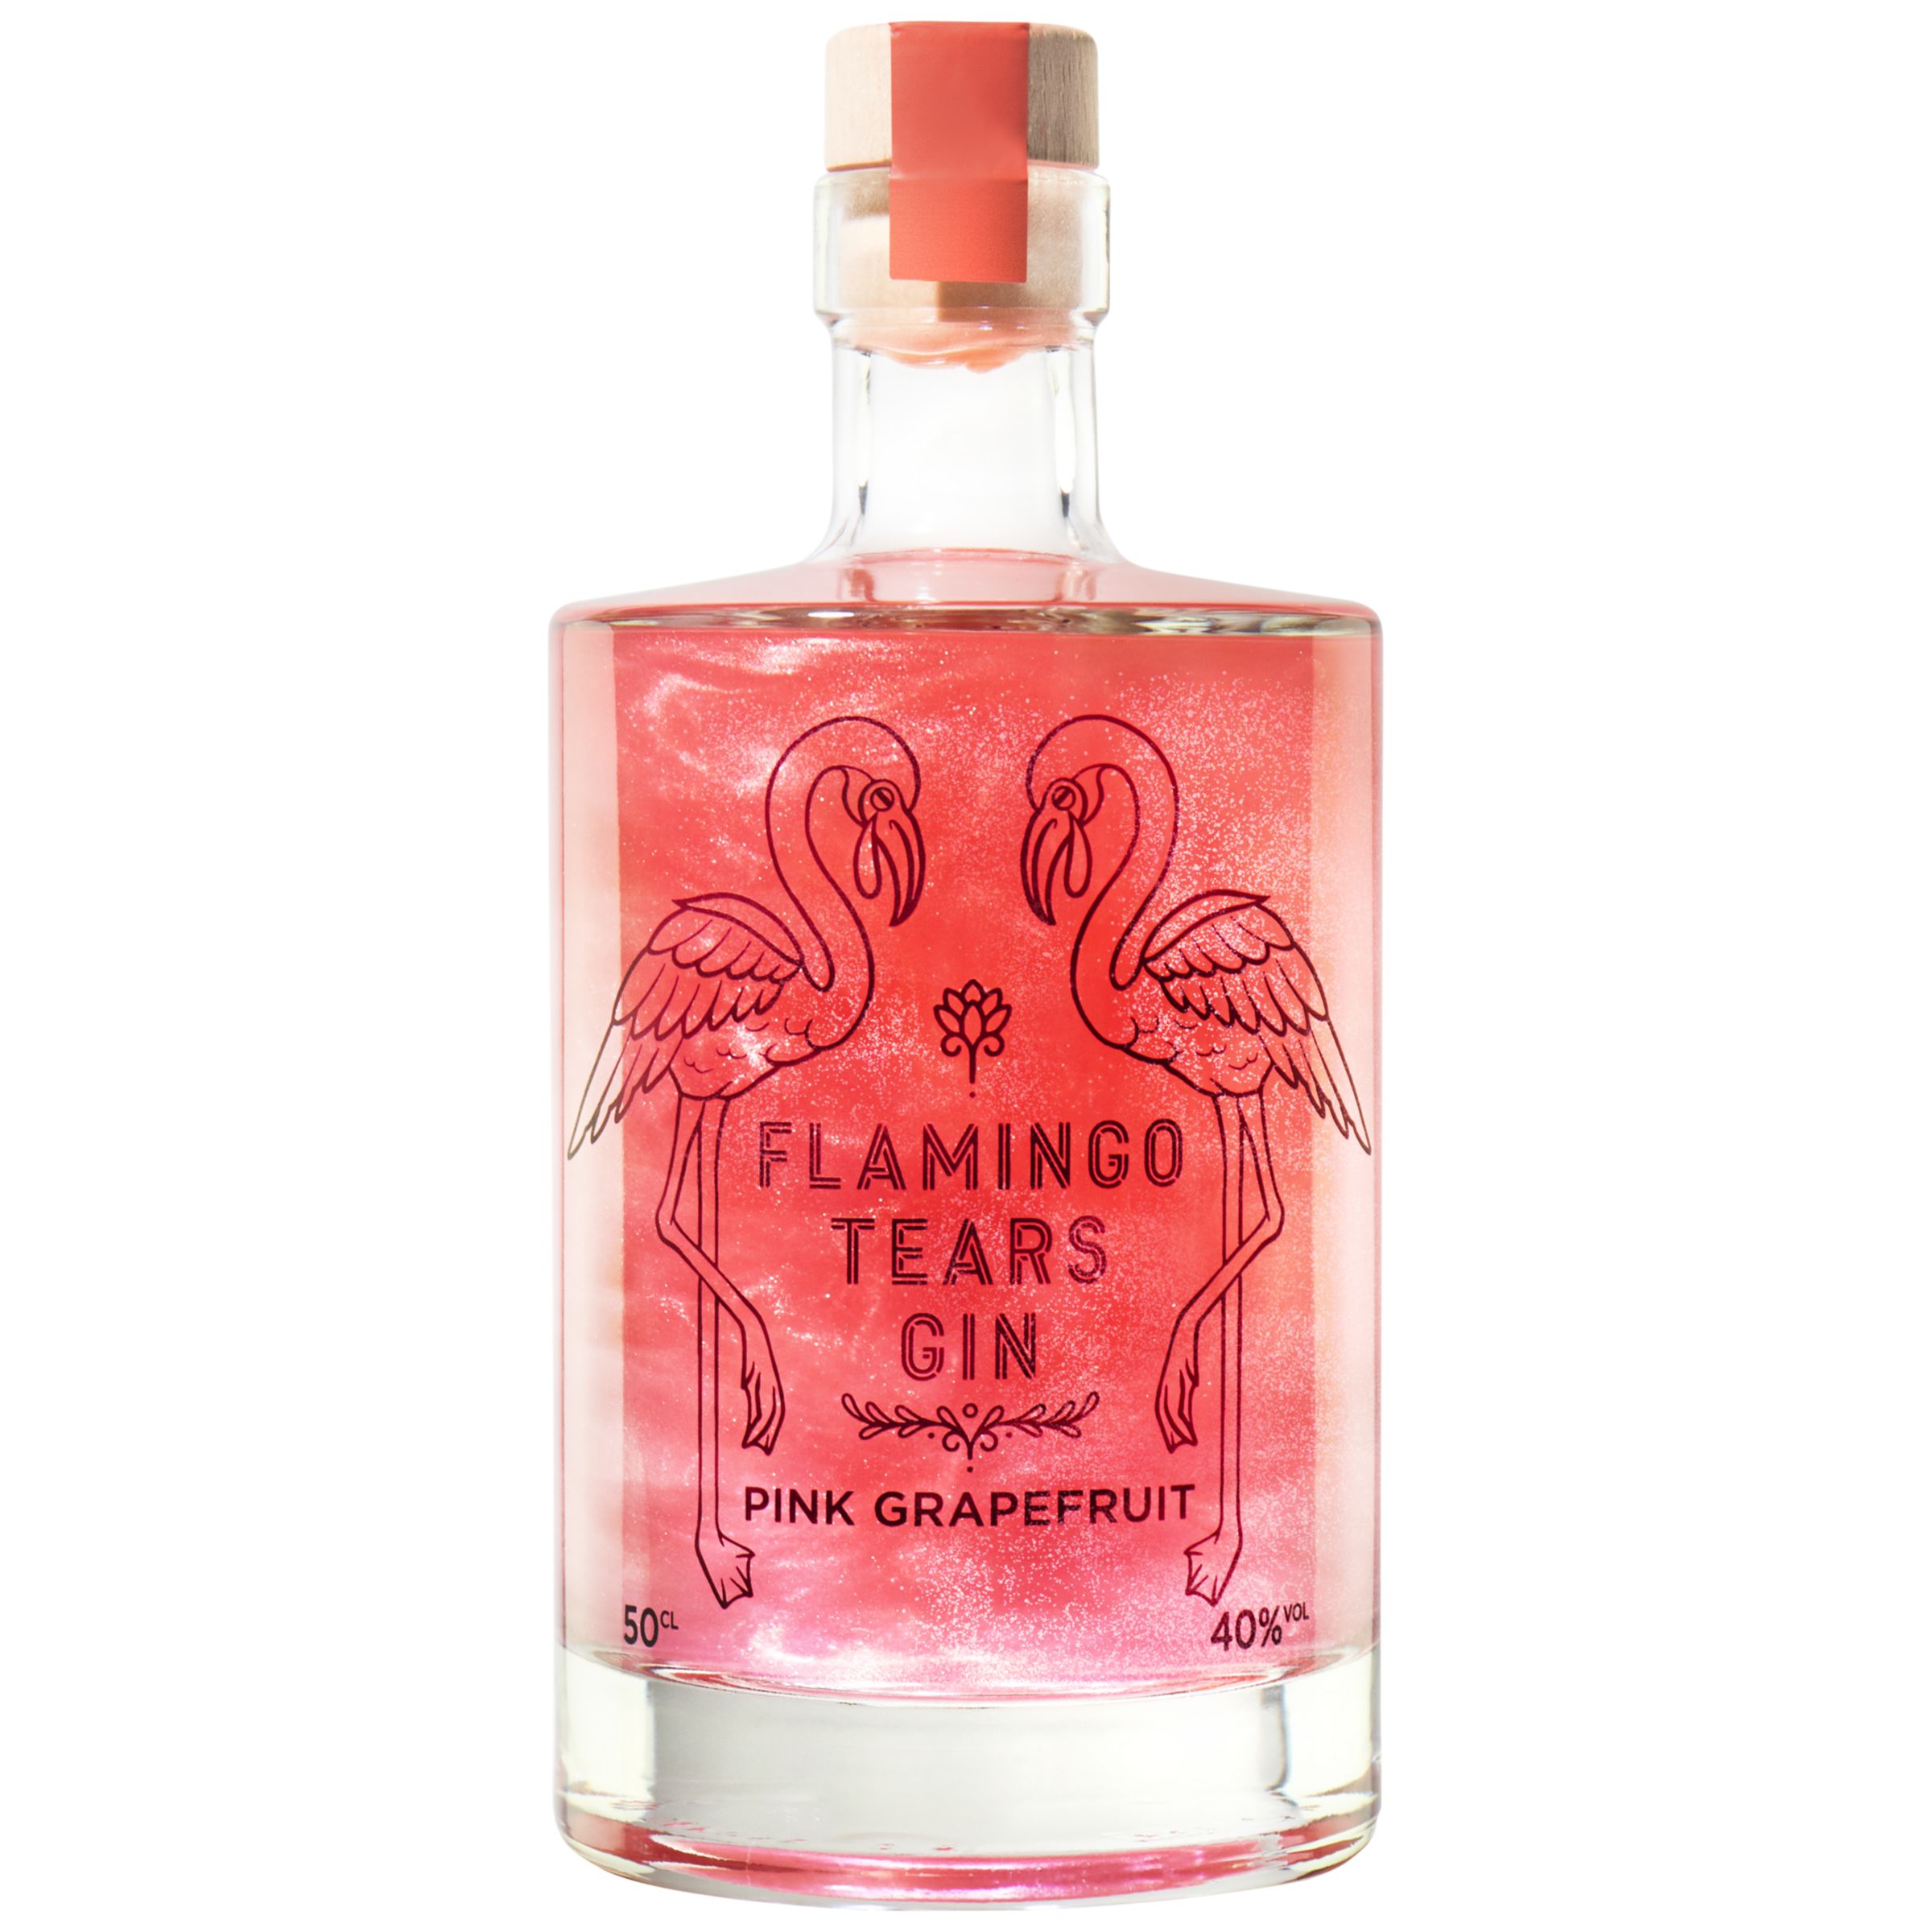 Firebox Flamingo Tears Grapefruit Gin, Pink 50cl